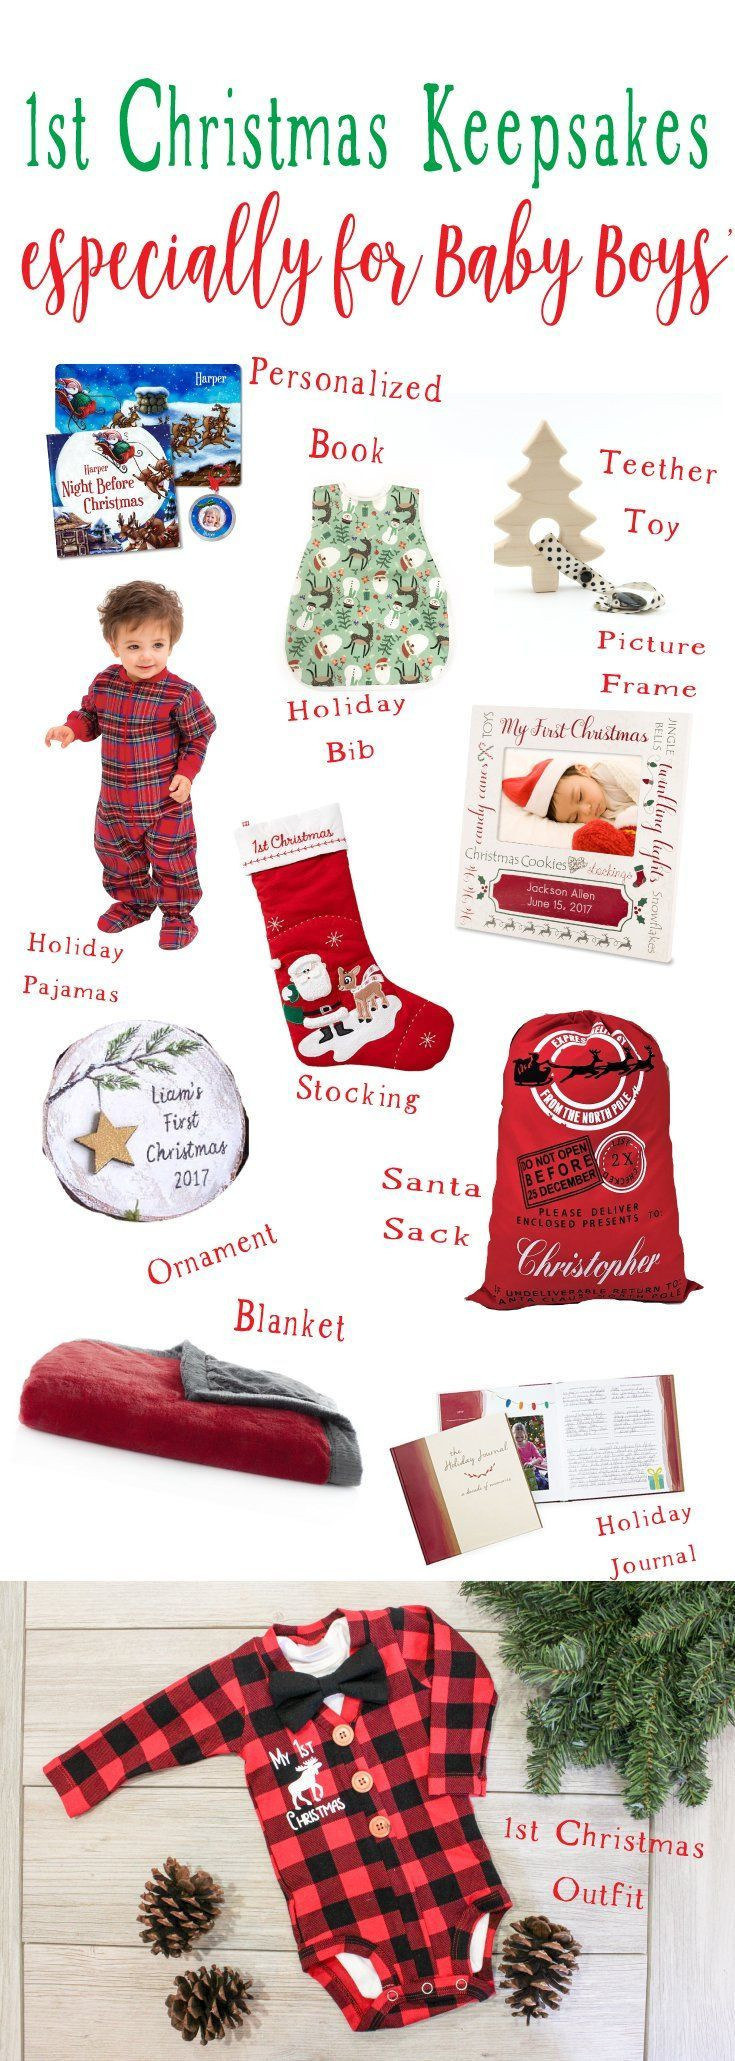 First Christmas Gift Ideas
 Baby Boy 1st Christmas Keepsake Ideas